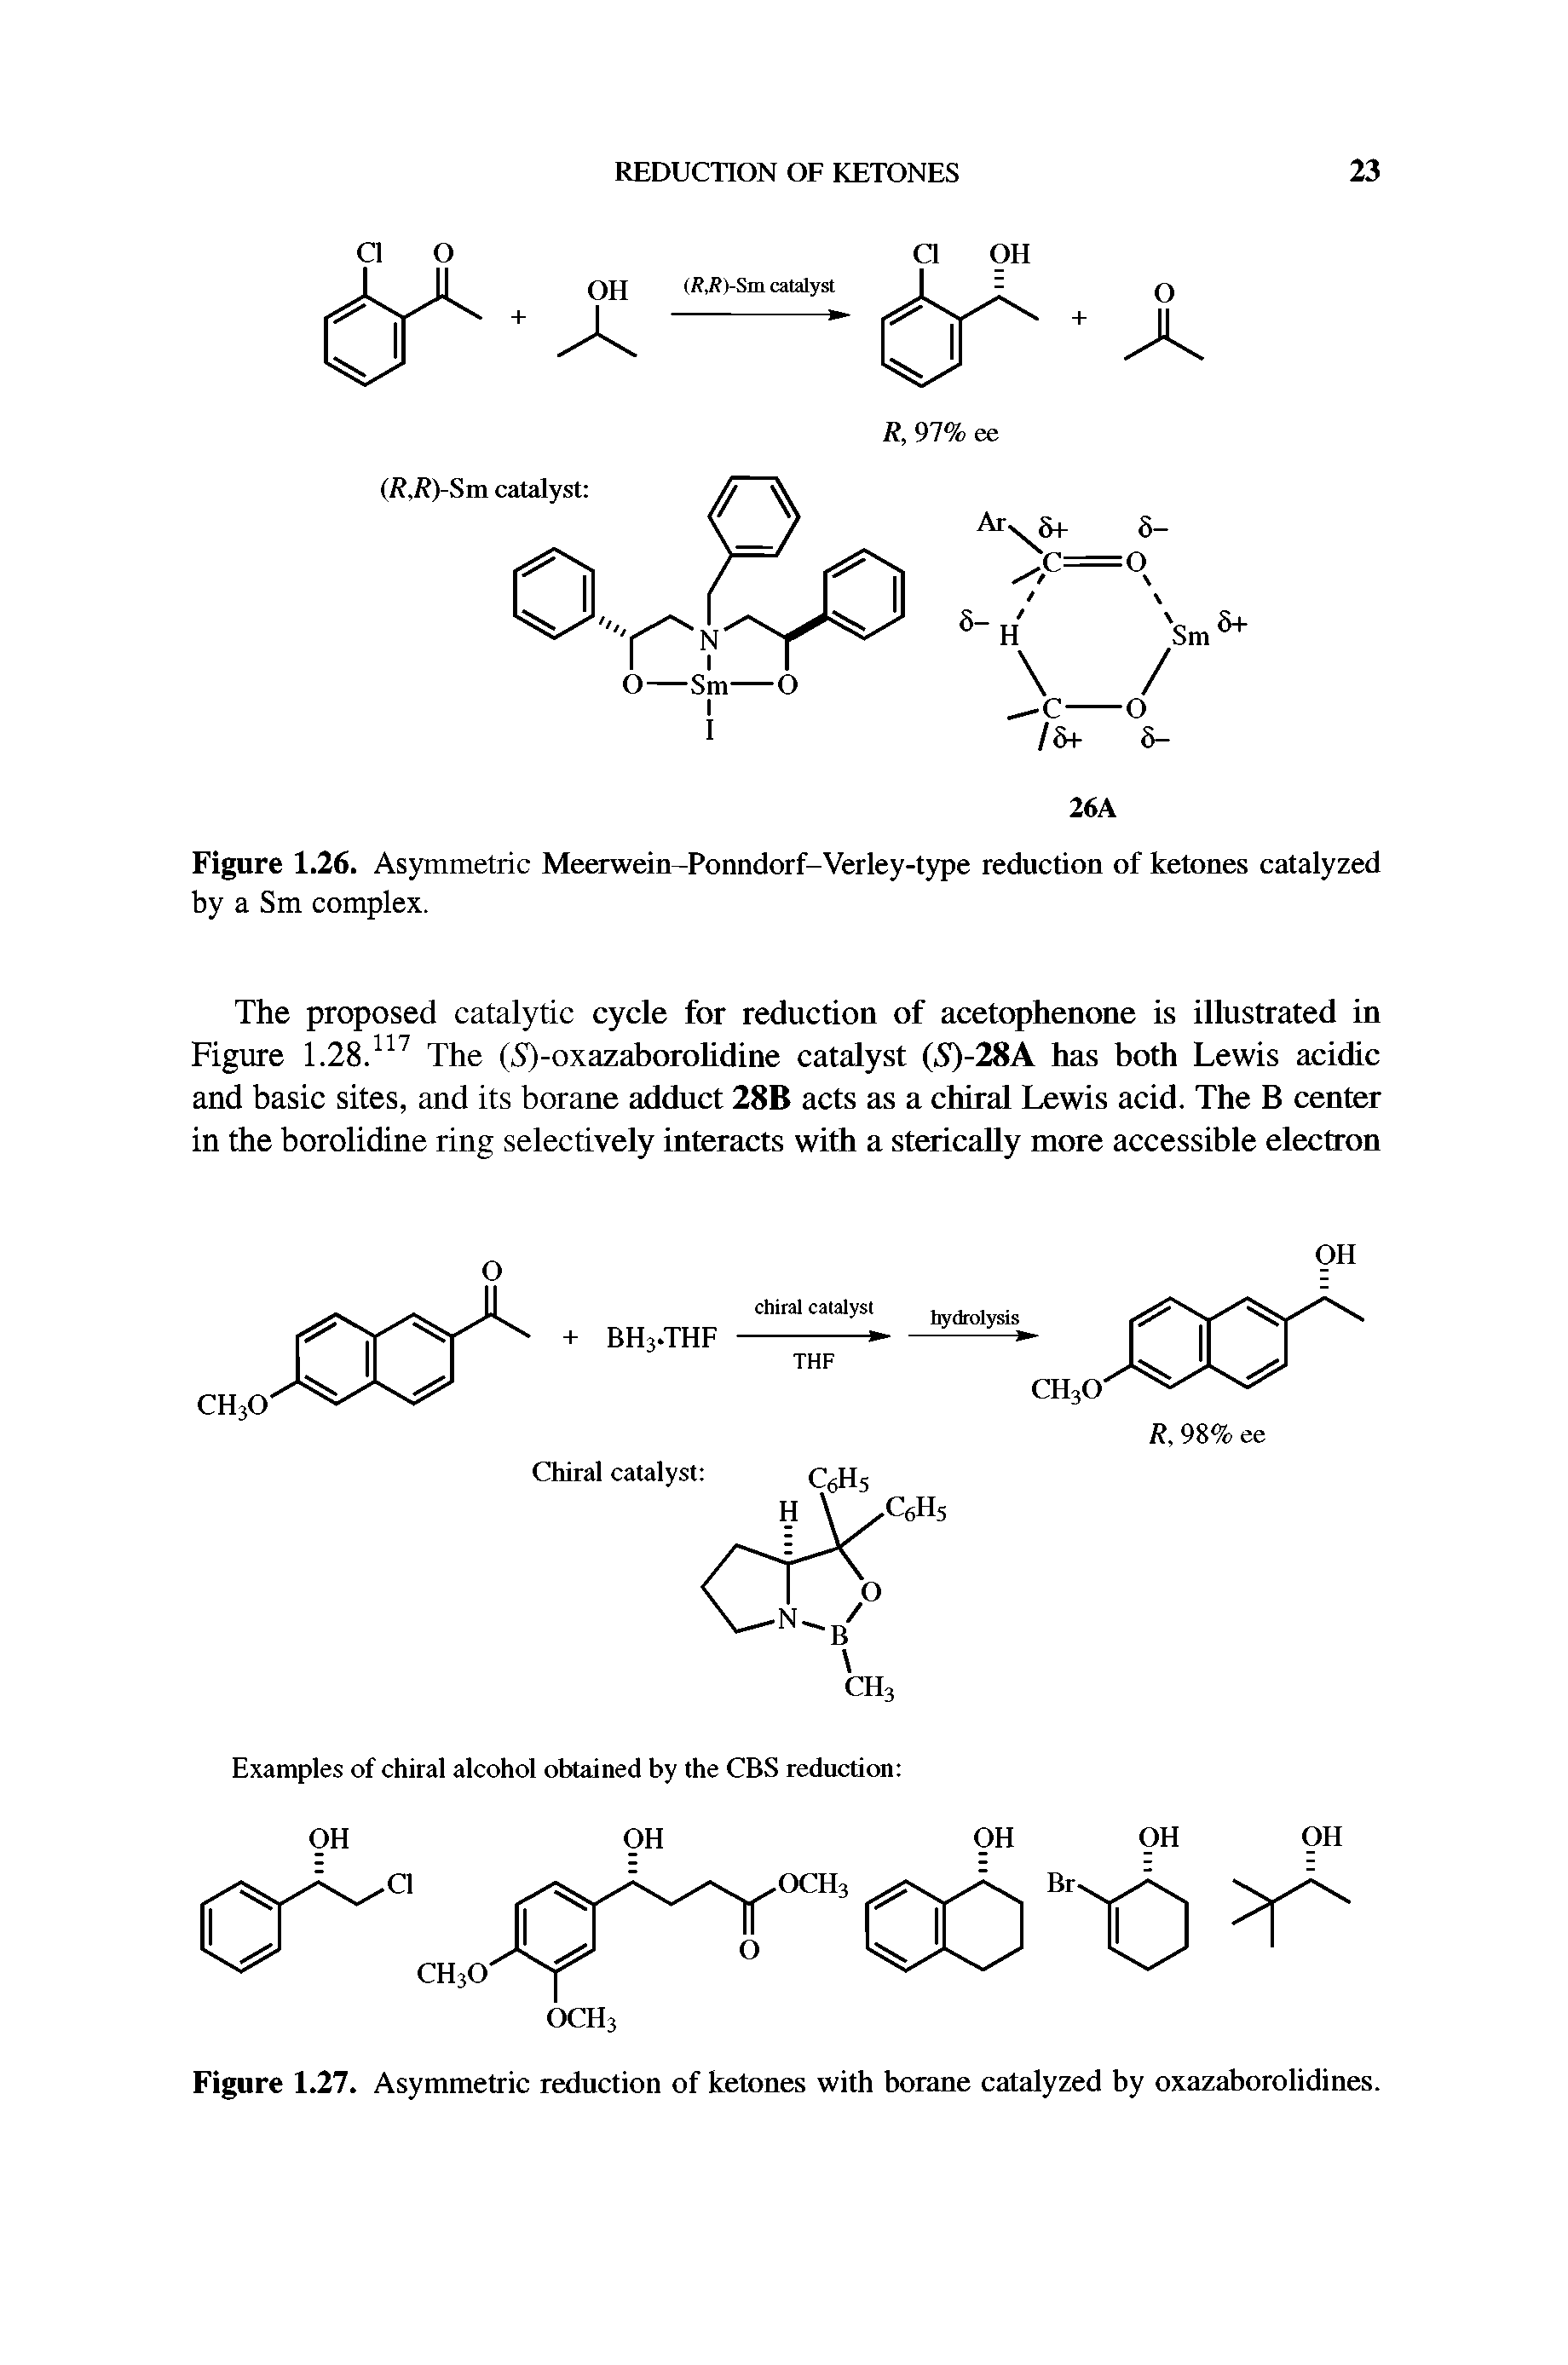 Figure 1.27. Asymmetric reduction of ketones with borane catalyzed by oxazaborolidines.